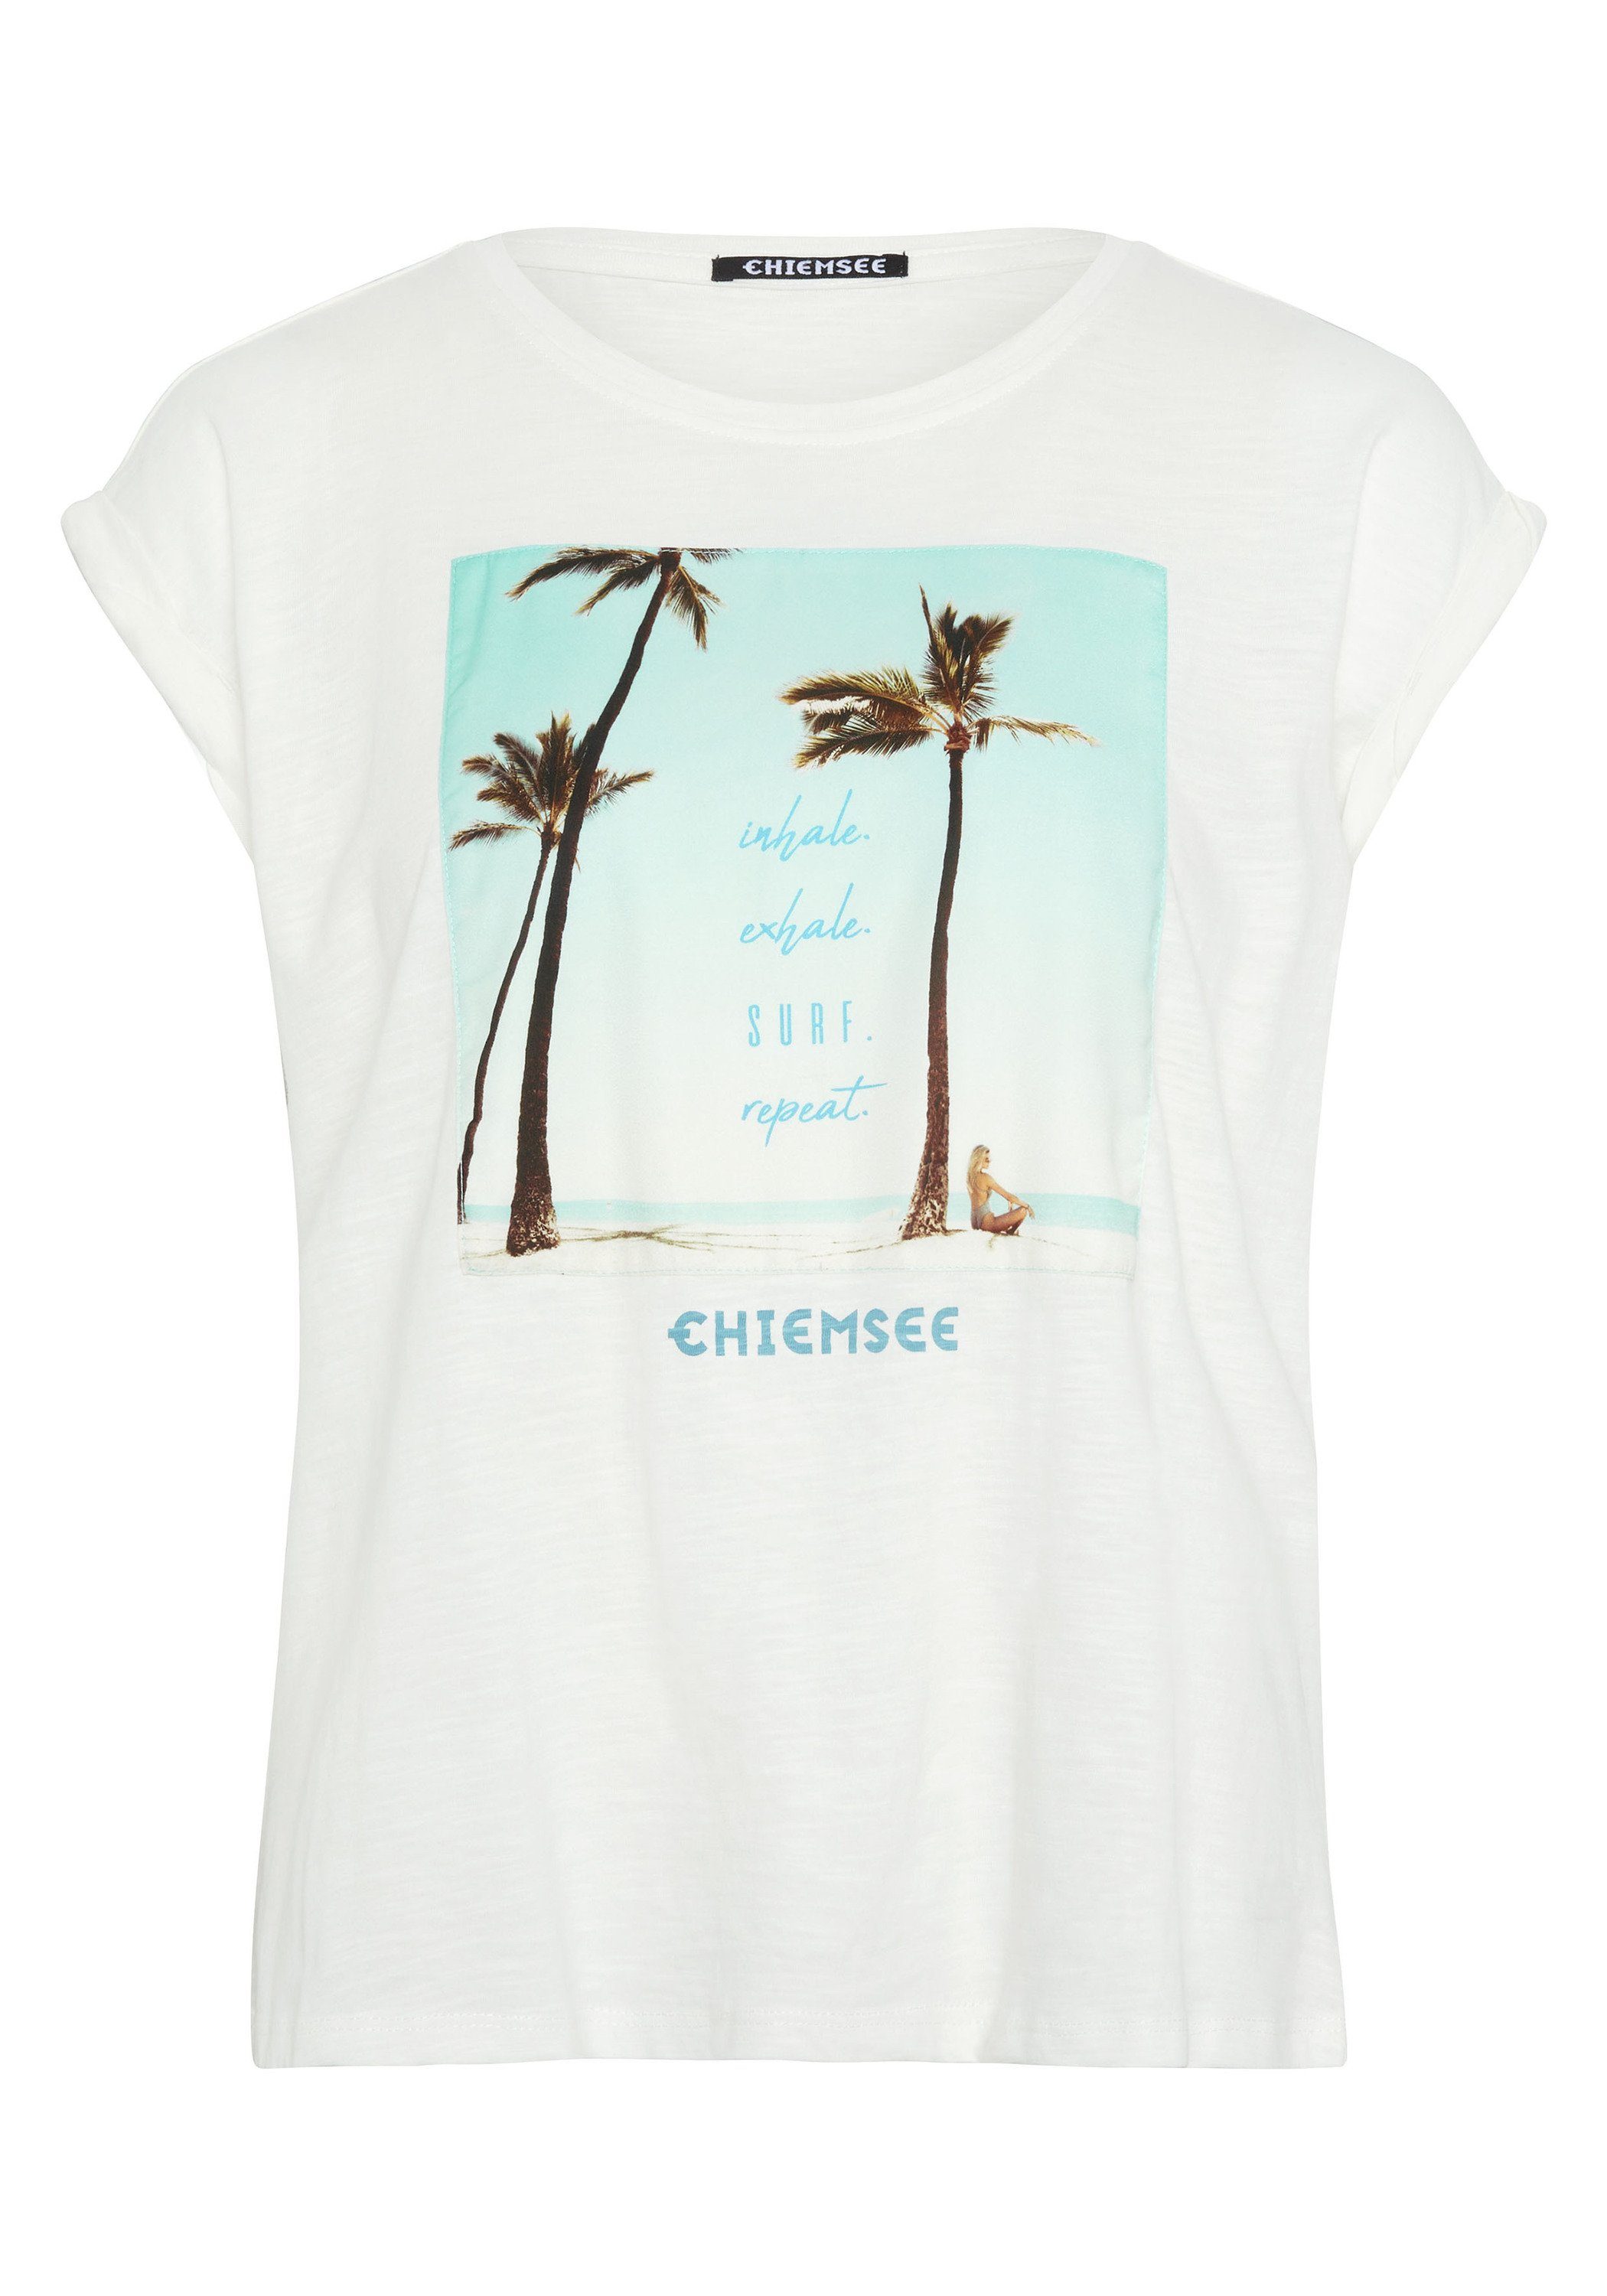 Chiemsee Print-Shirt mit Fotoprint White 1 T-Shirt 11-4202 Star